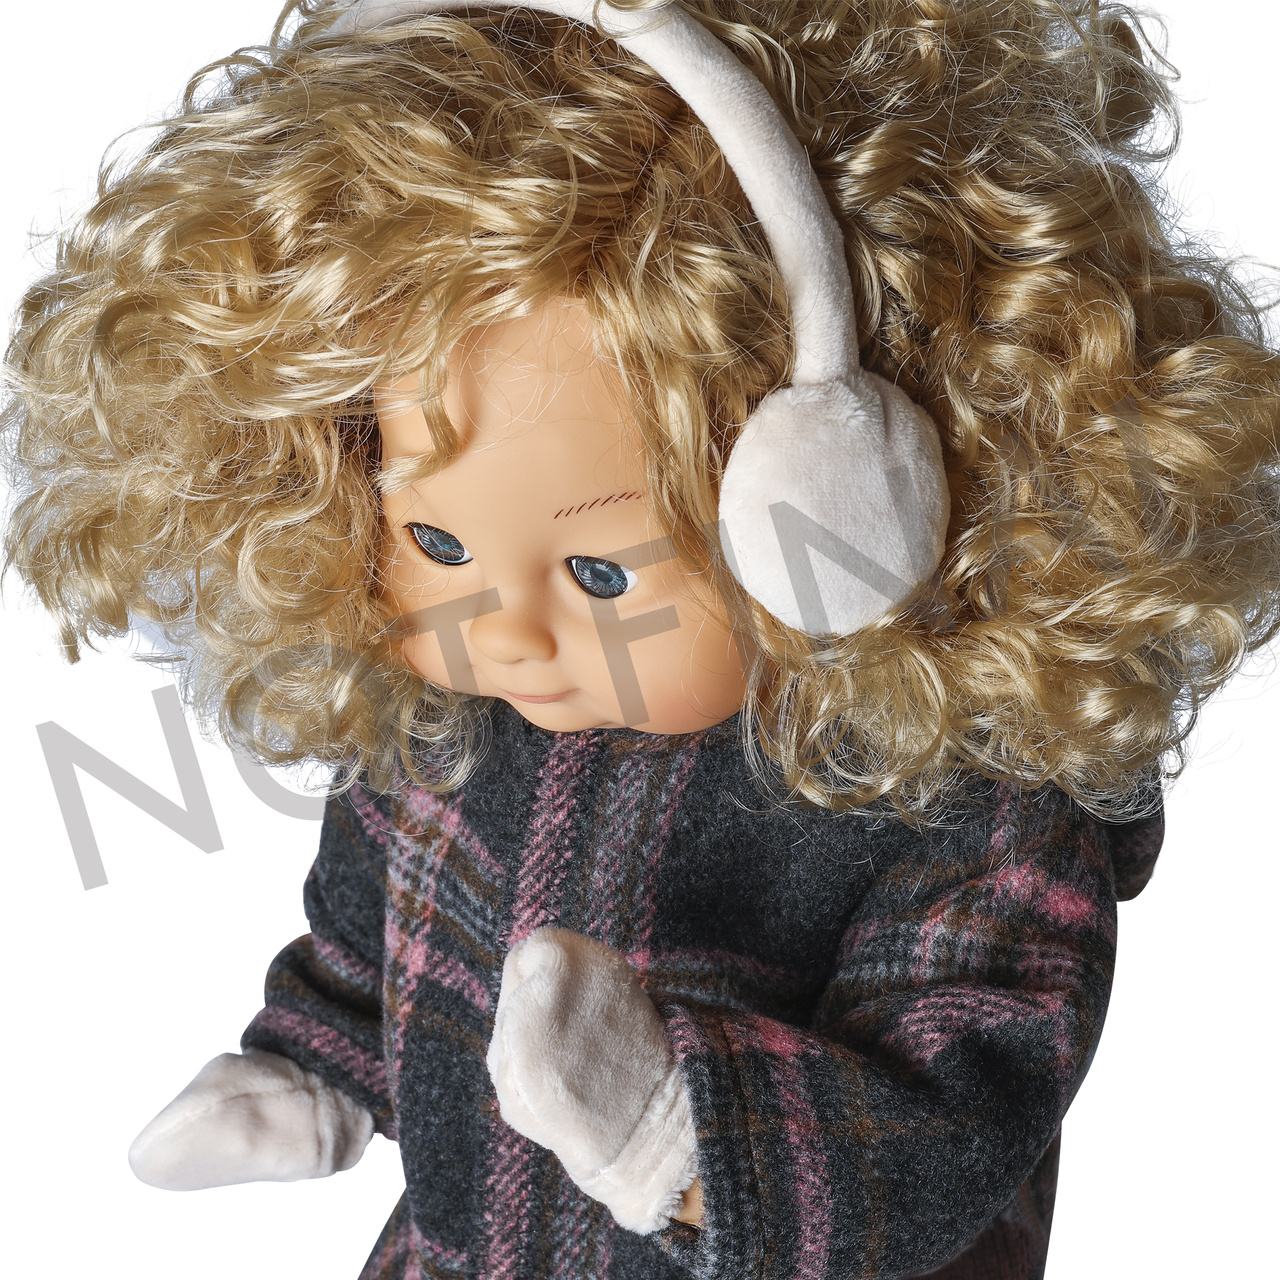 Doll clothes skrållan doll clothes muffs & mittens 36-40 cm